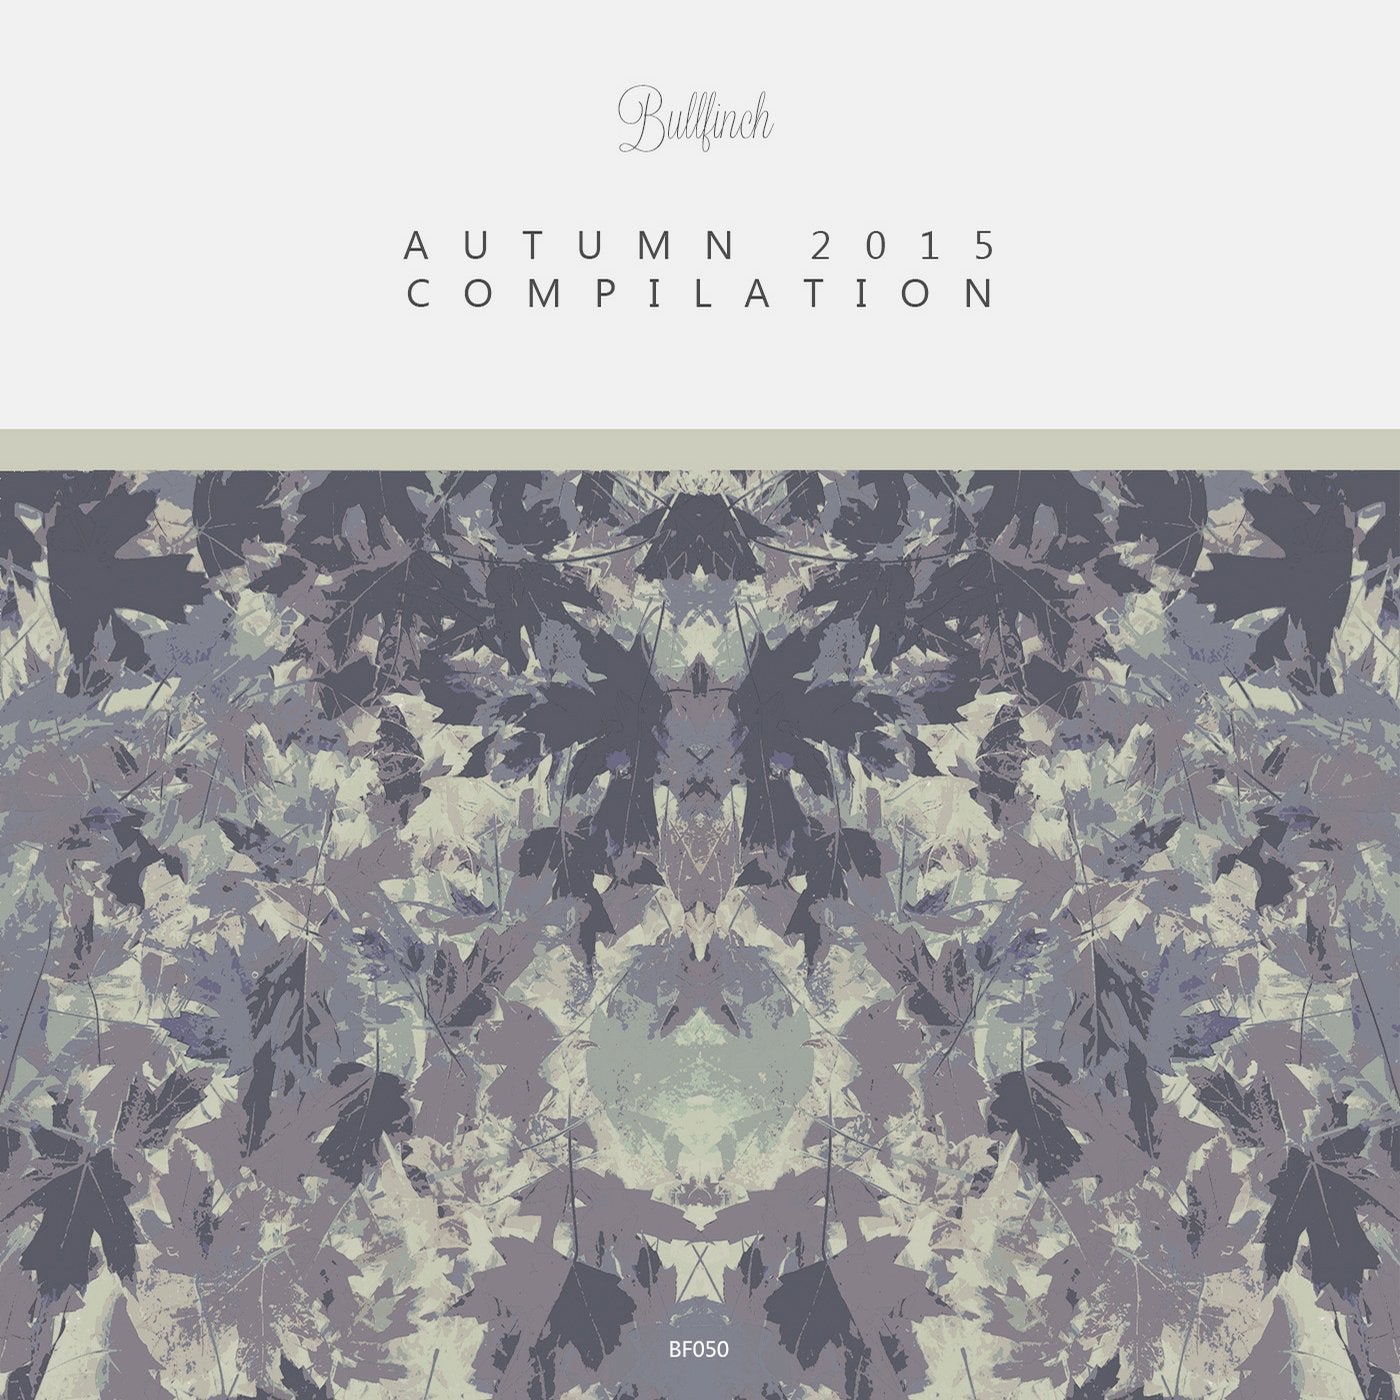 Bullfinch Autumn Compilation 2015